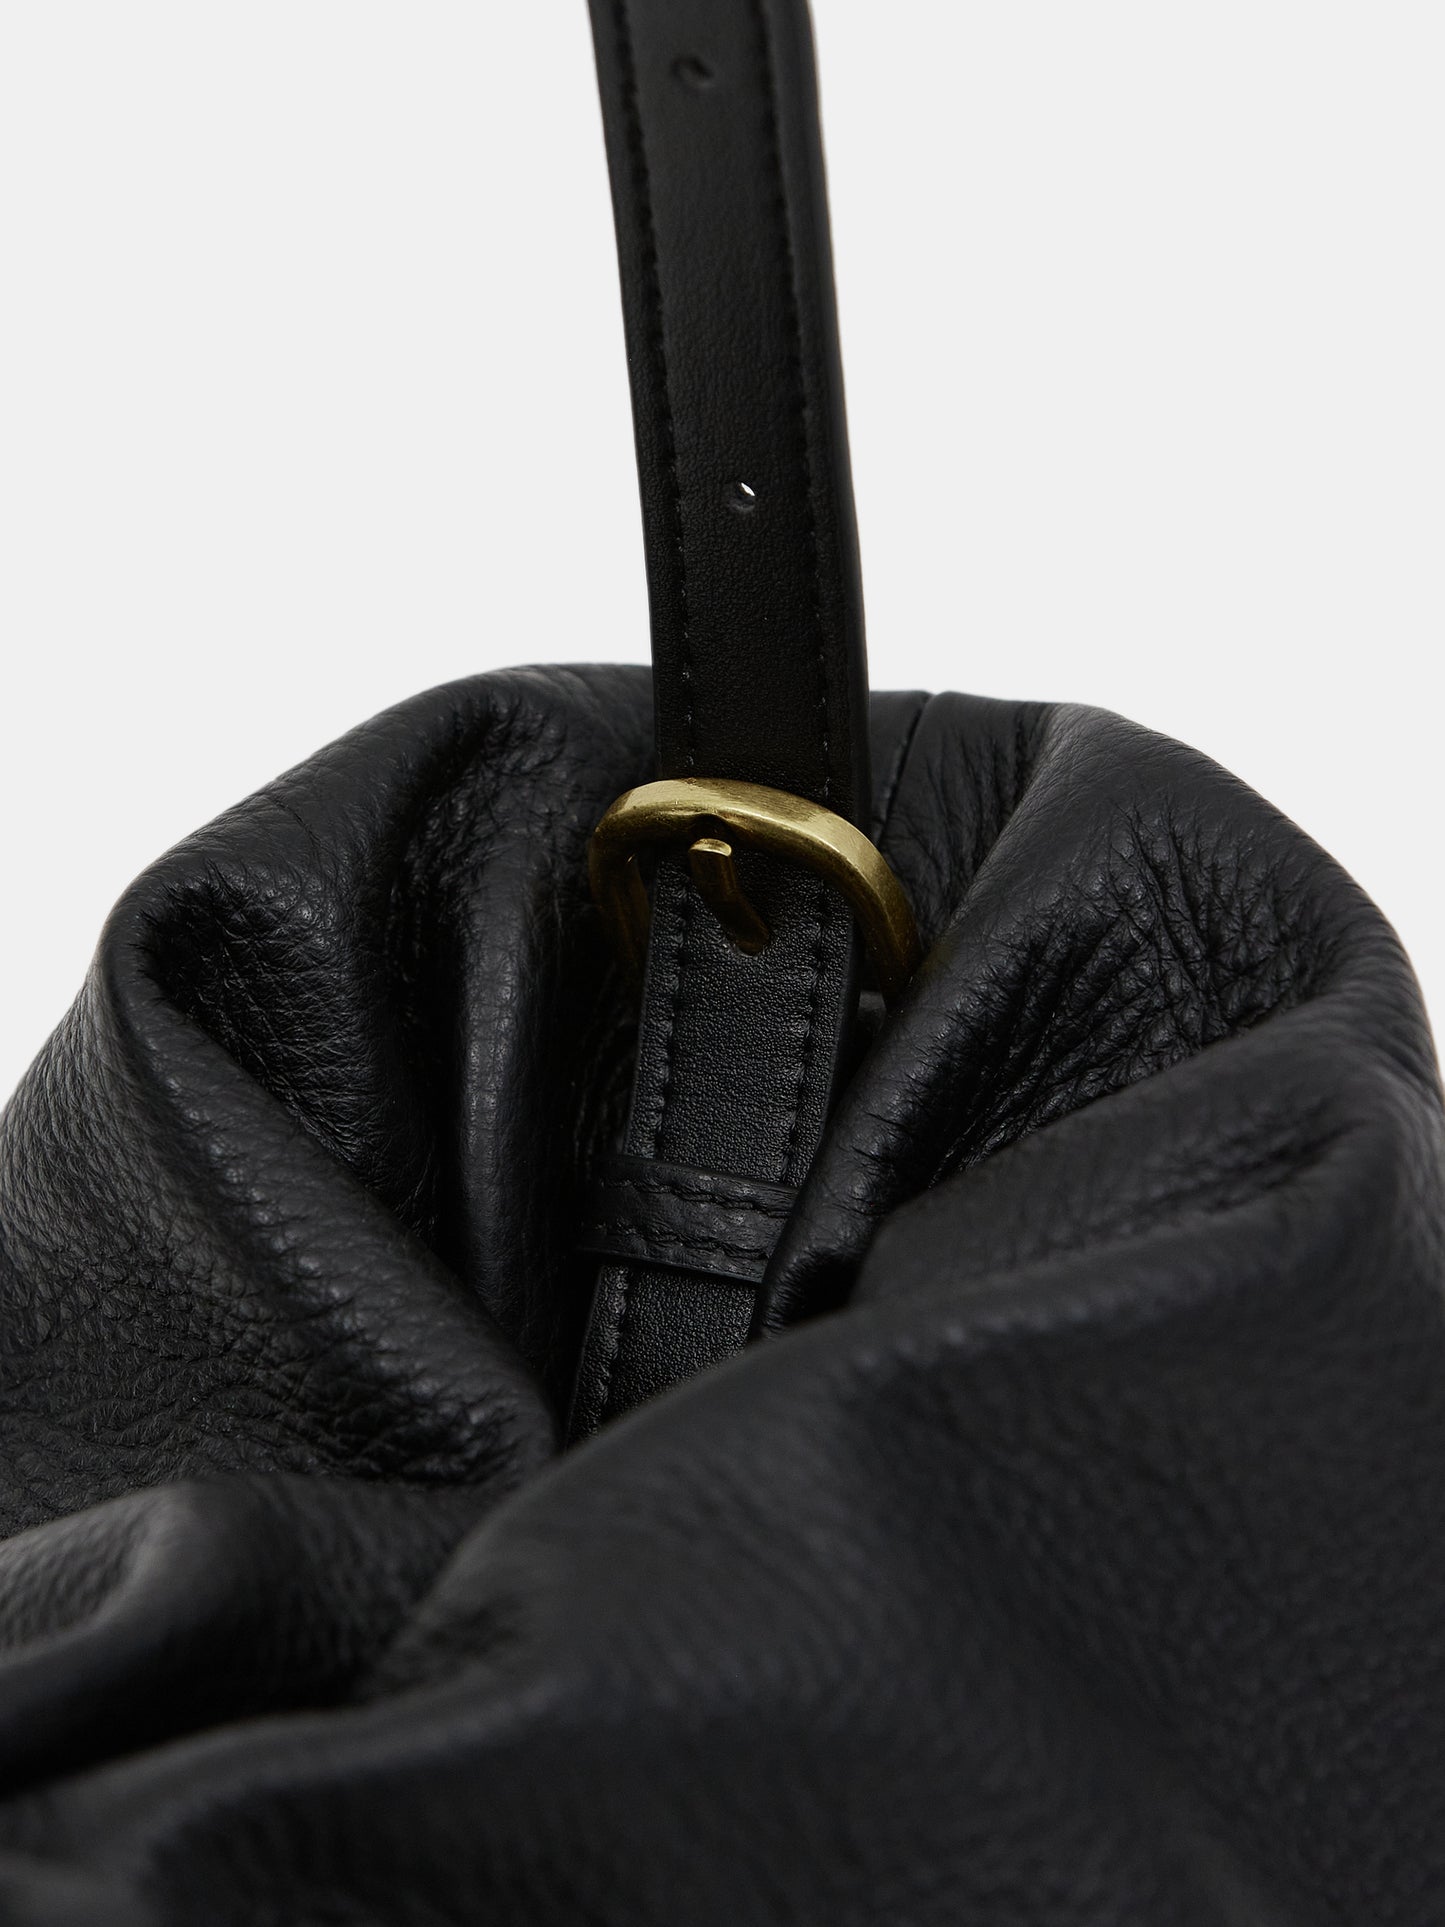 Origami Leather Bag, Black